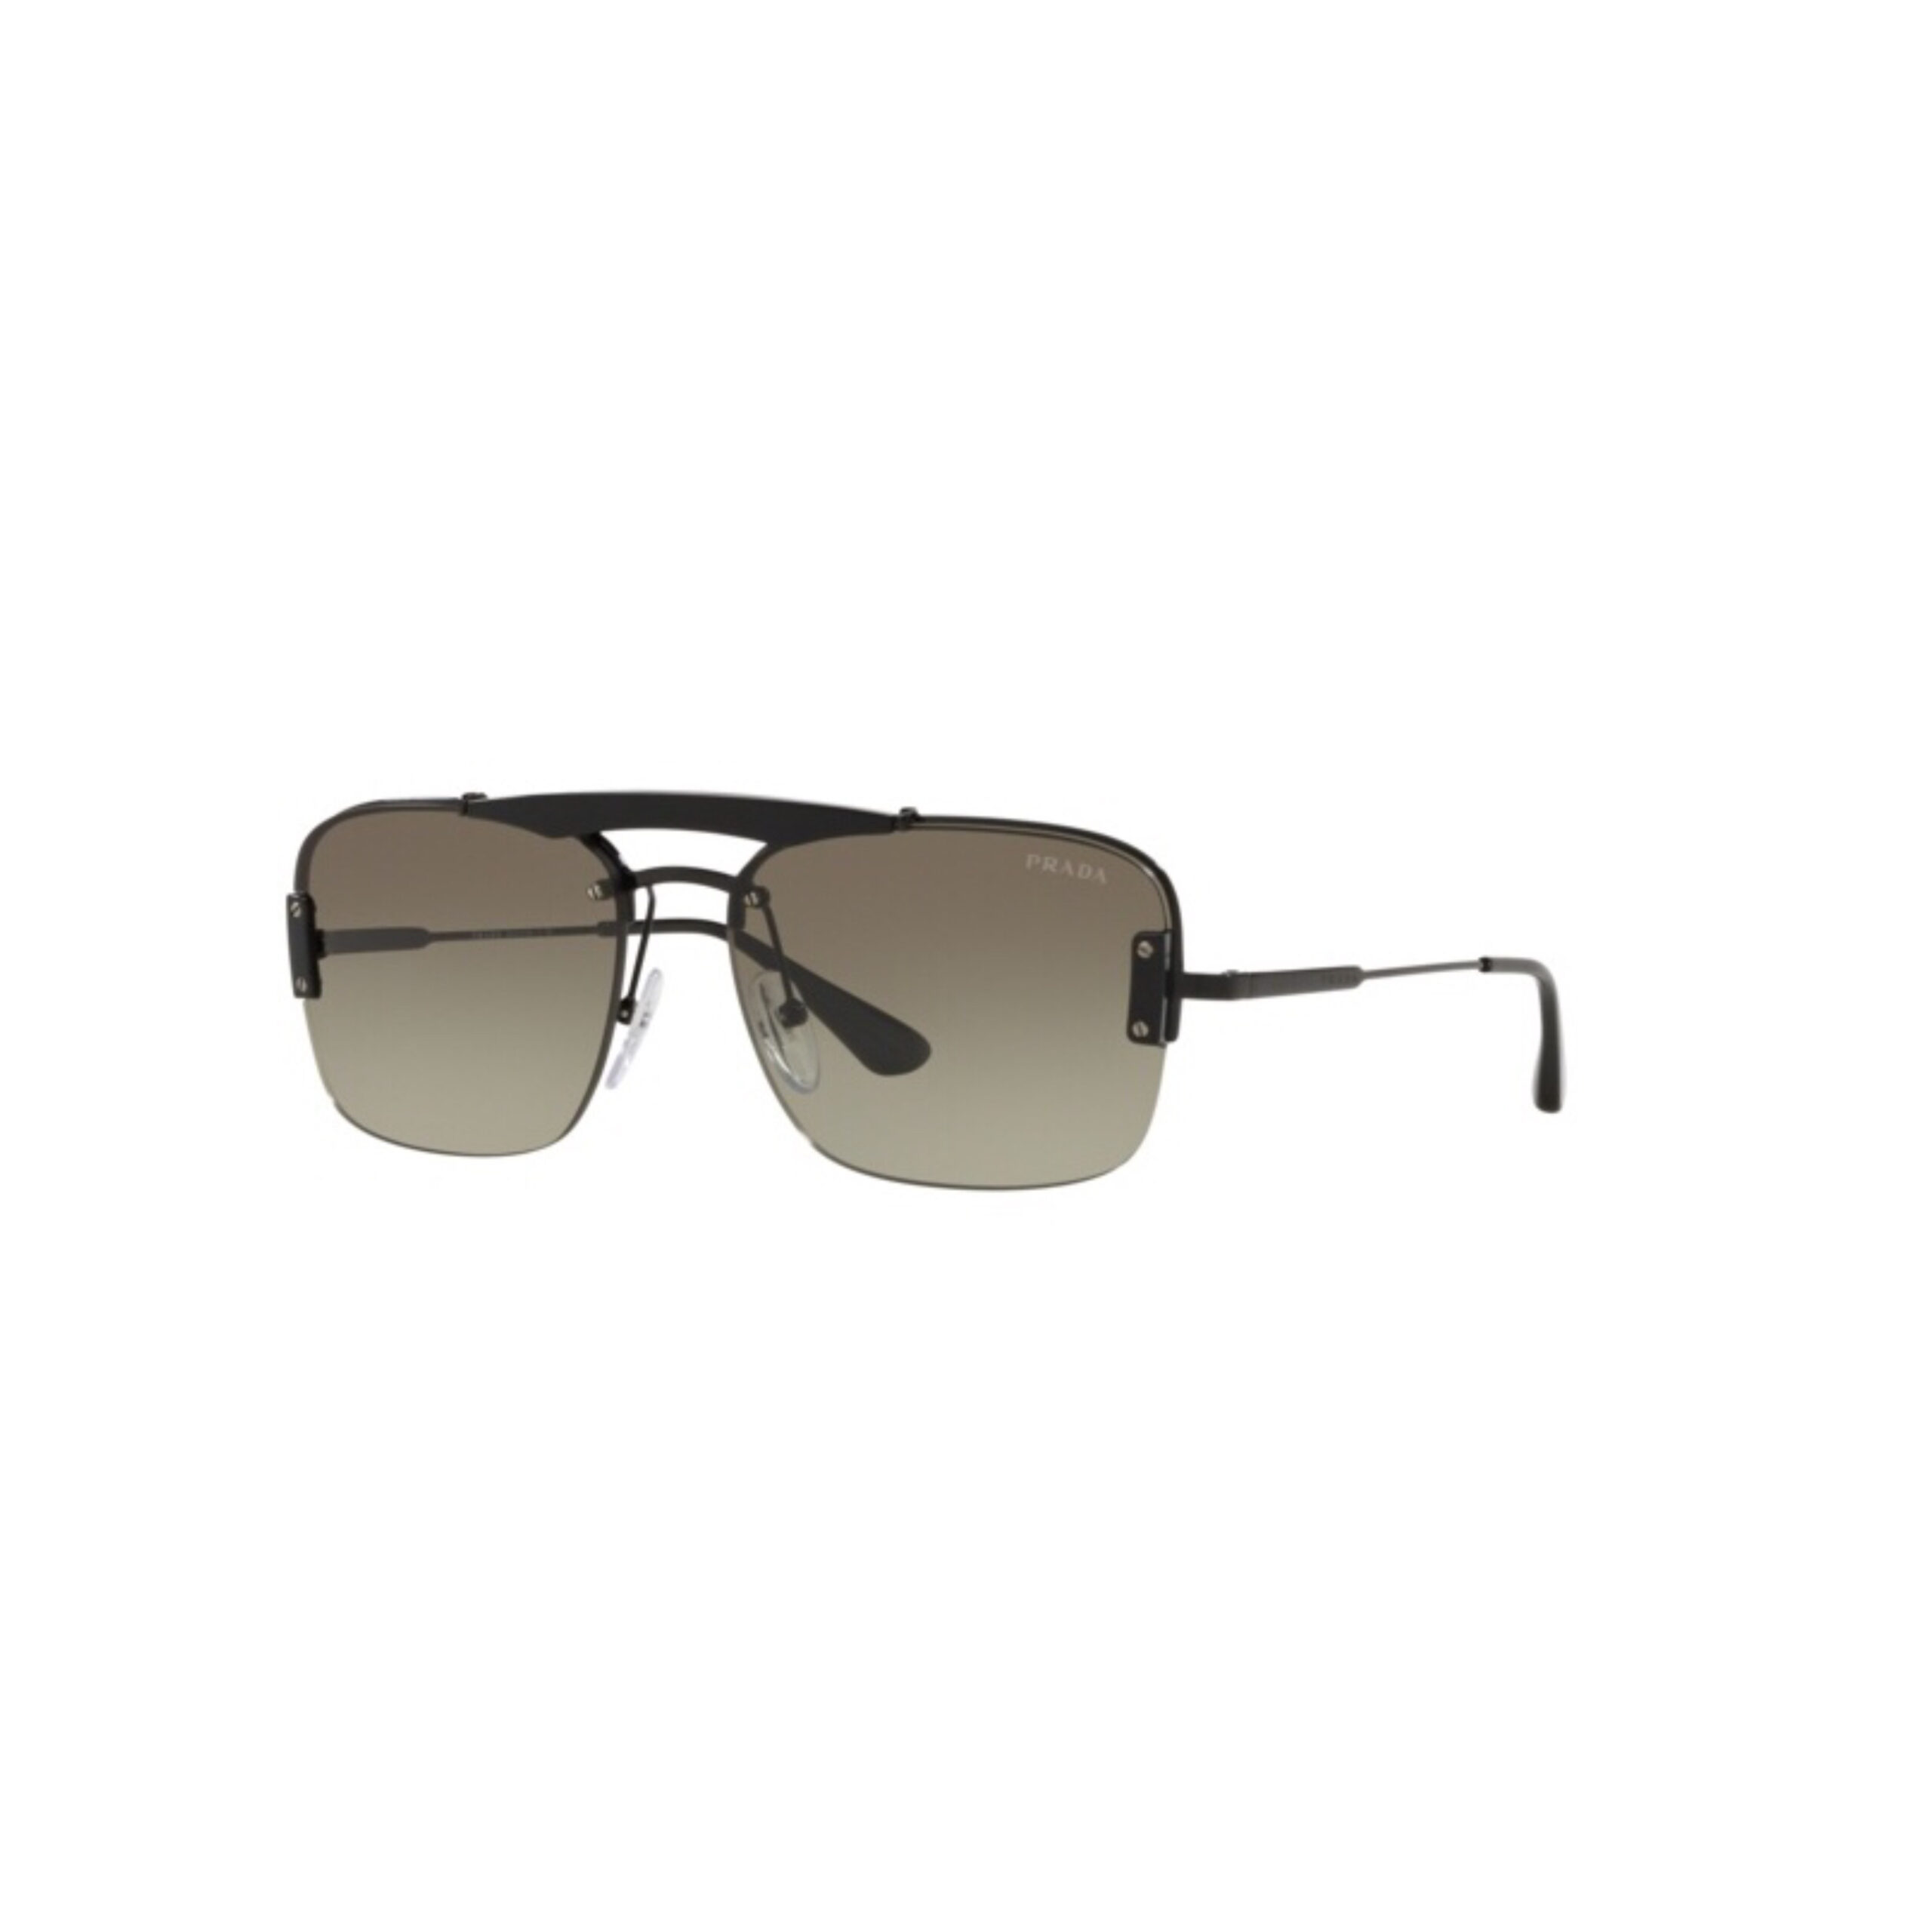 Unboxing Prada Sunglasses PR 54ZS Pilot Style - YouTube